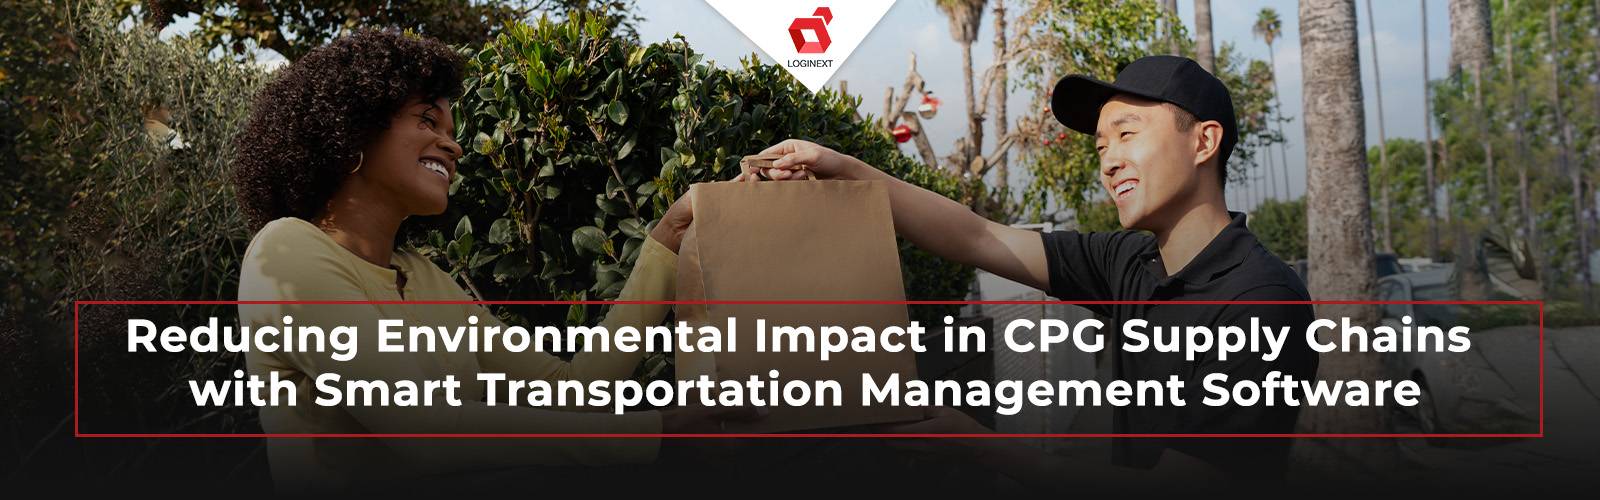 Smart Transportation Management Software Improves Sustainability